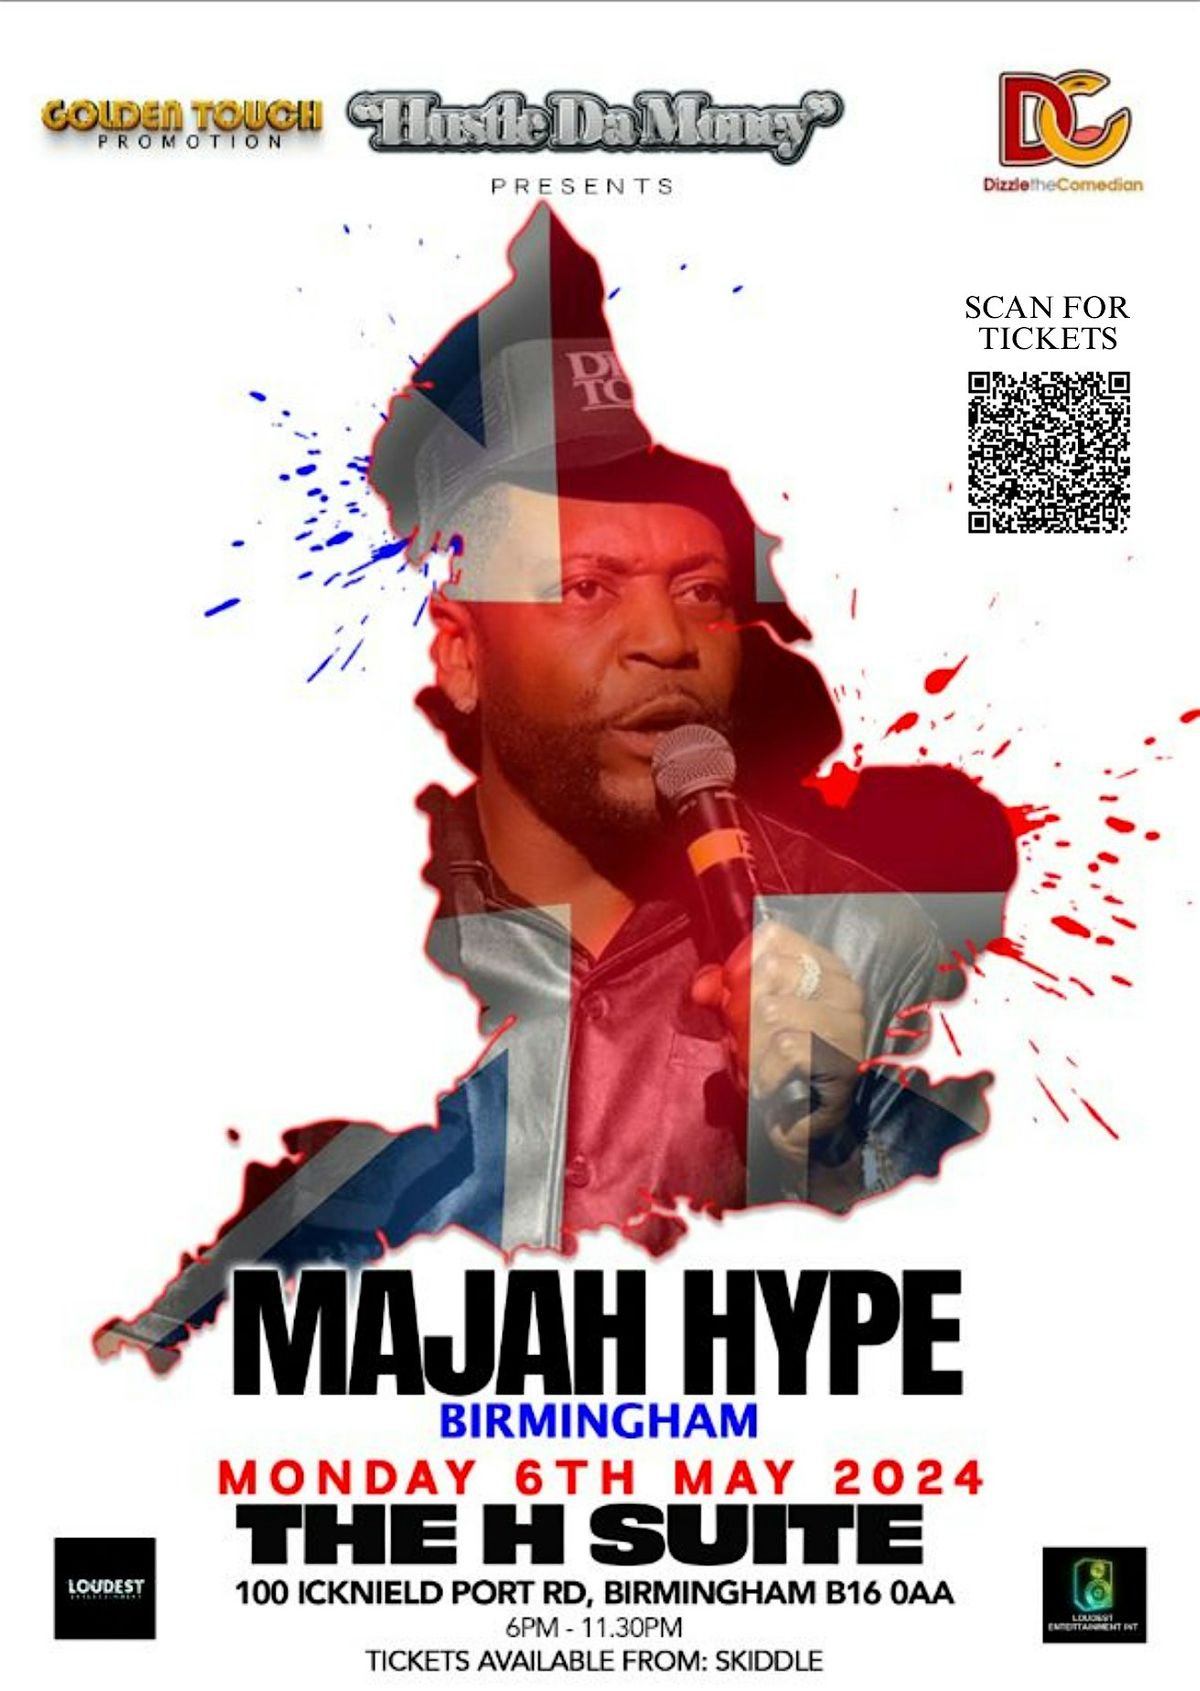 MAJAH HYPE UK TOUR - BIRMINGHAM LEG